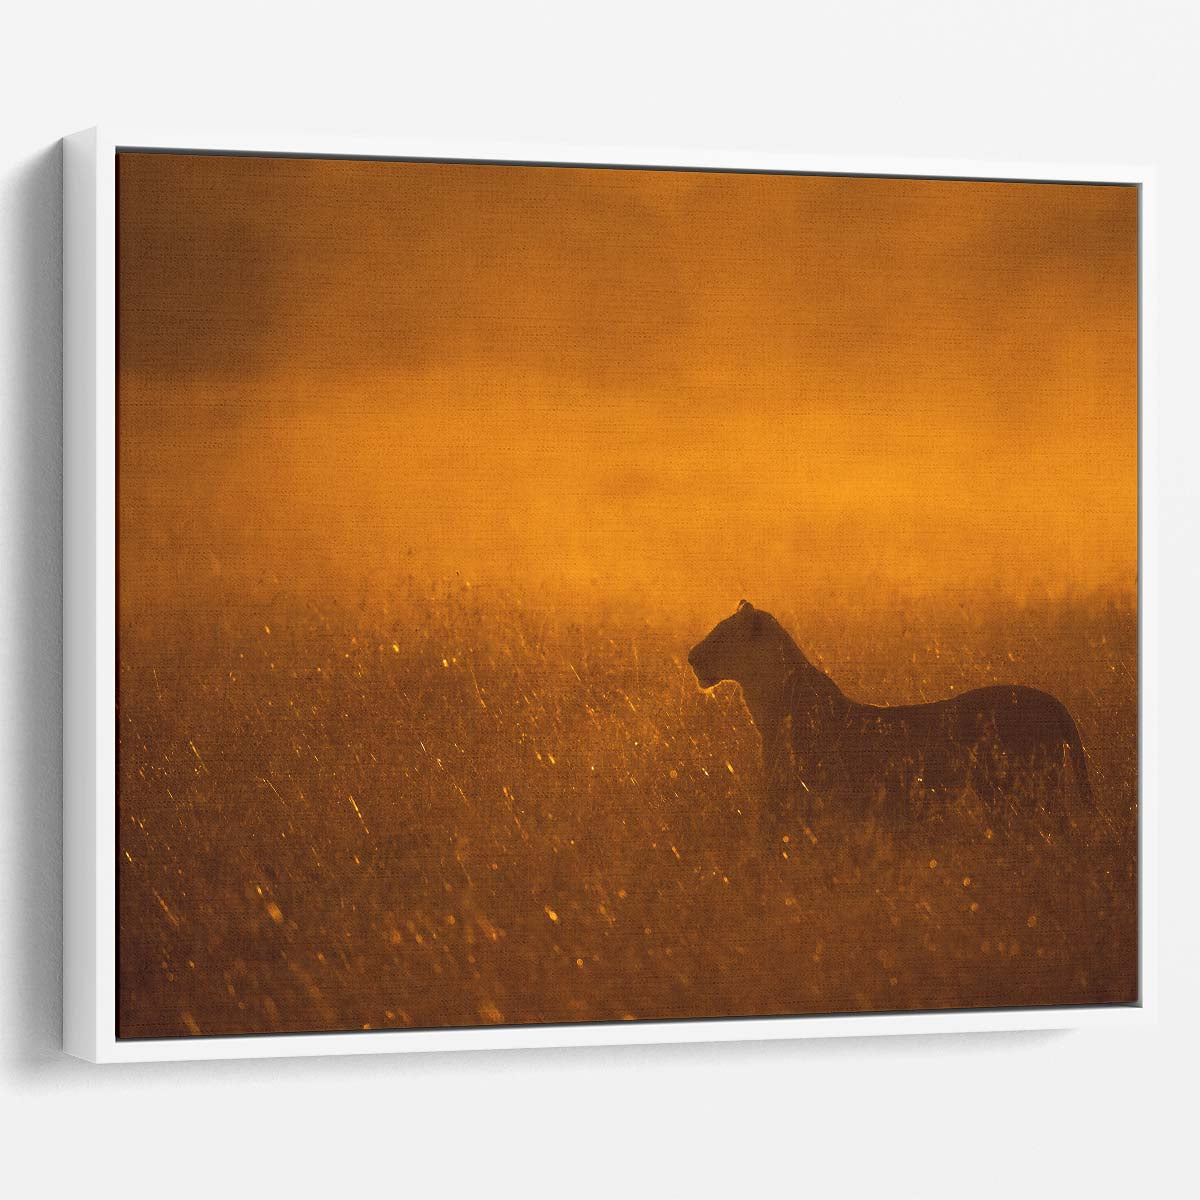 Golden Mist Lioness Solitary Safari Predator Wall Art by Luxuriance Designs. Made in USA.